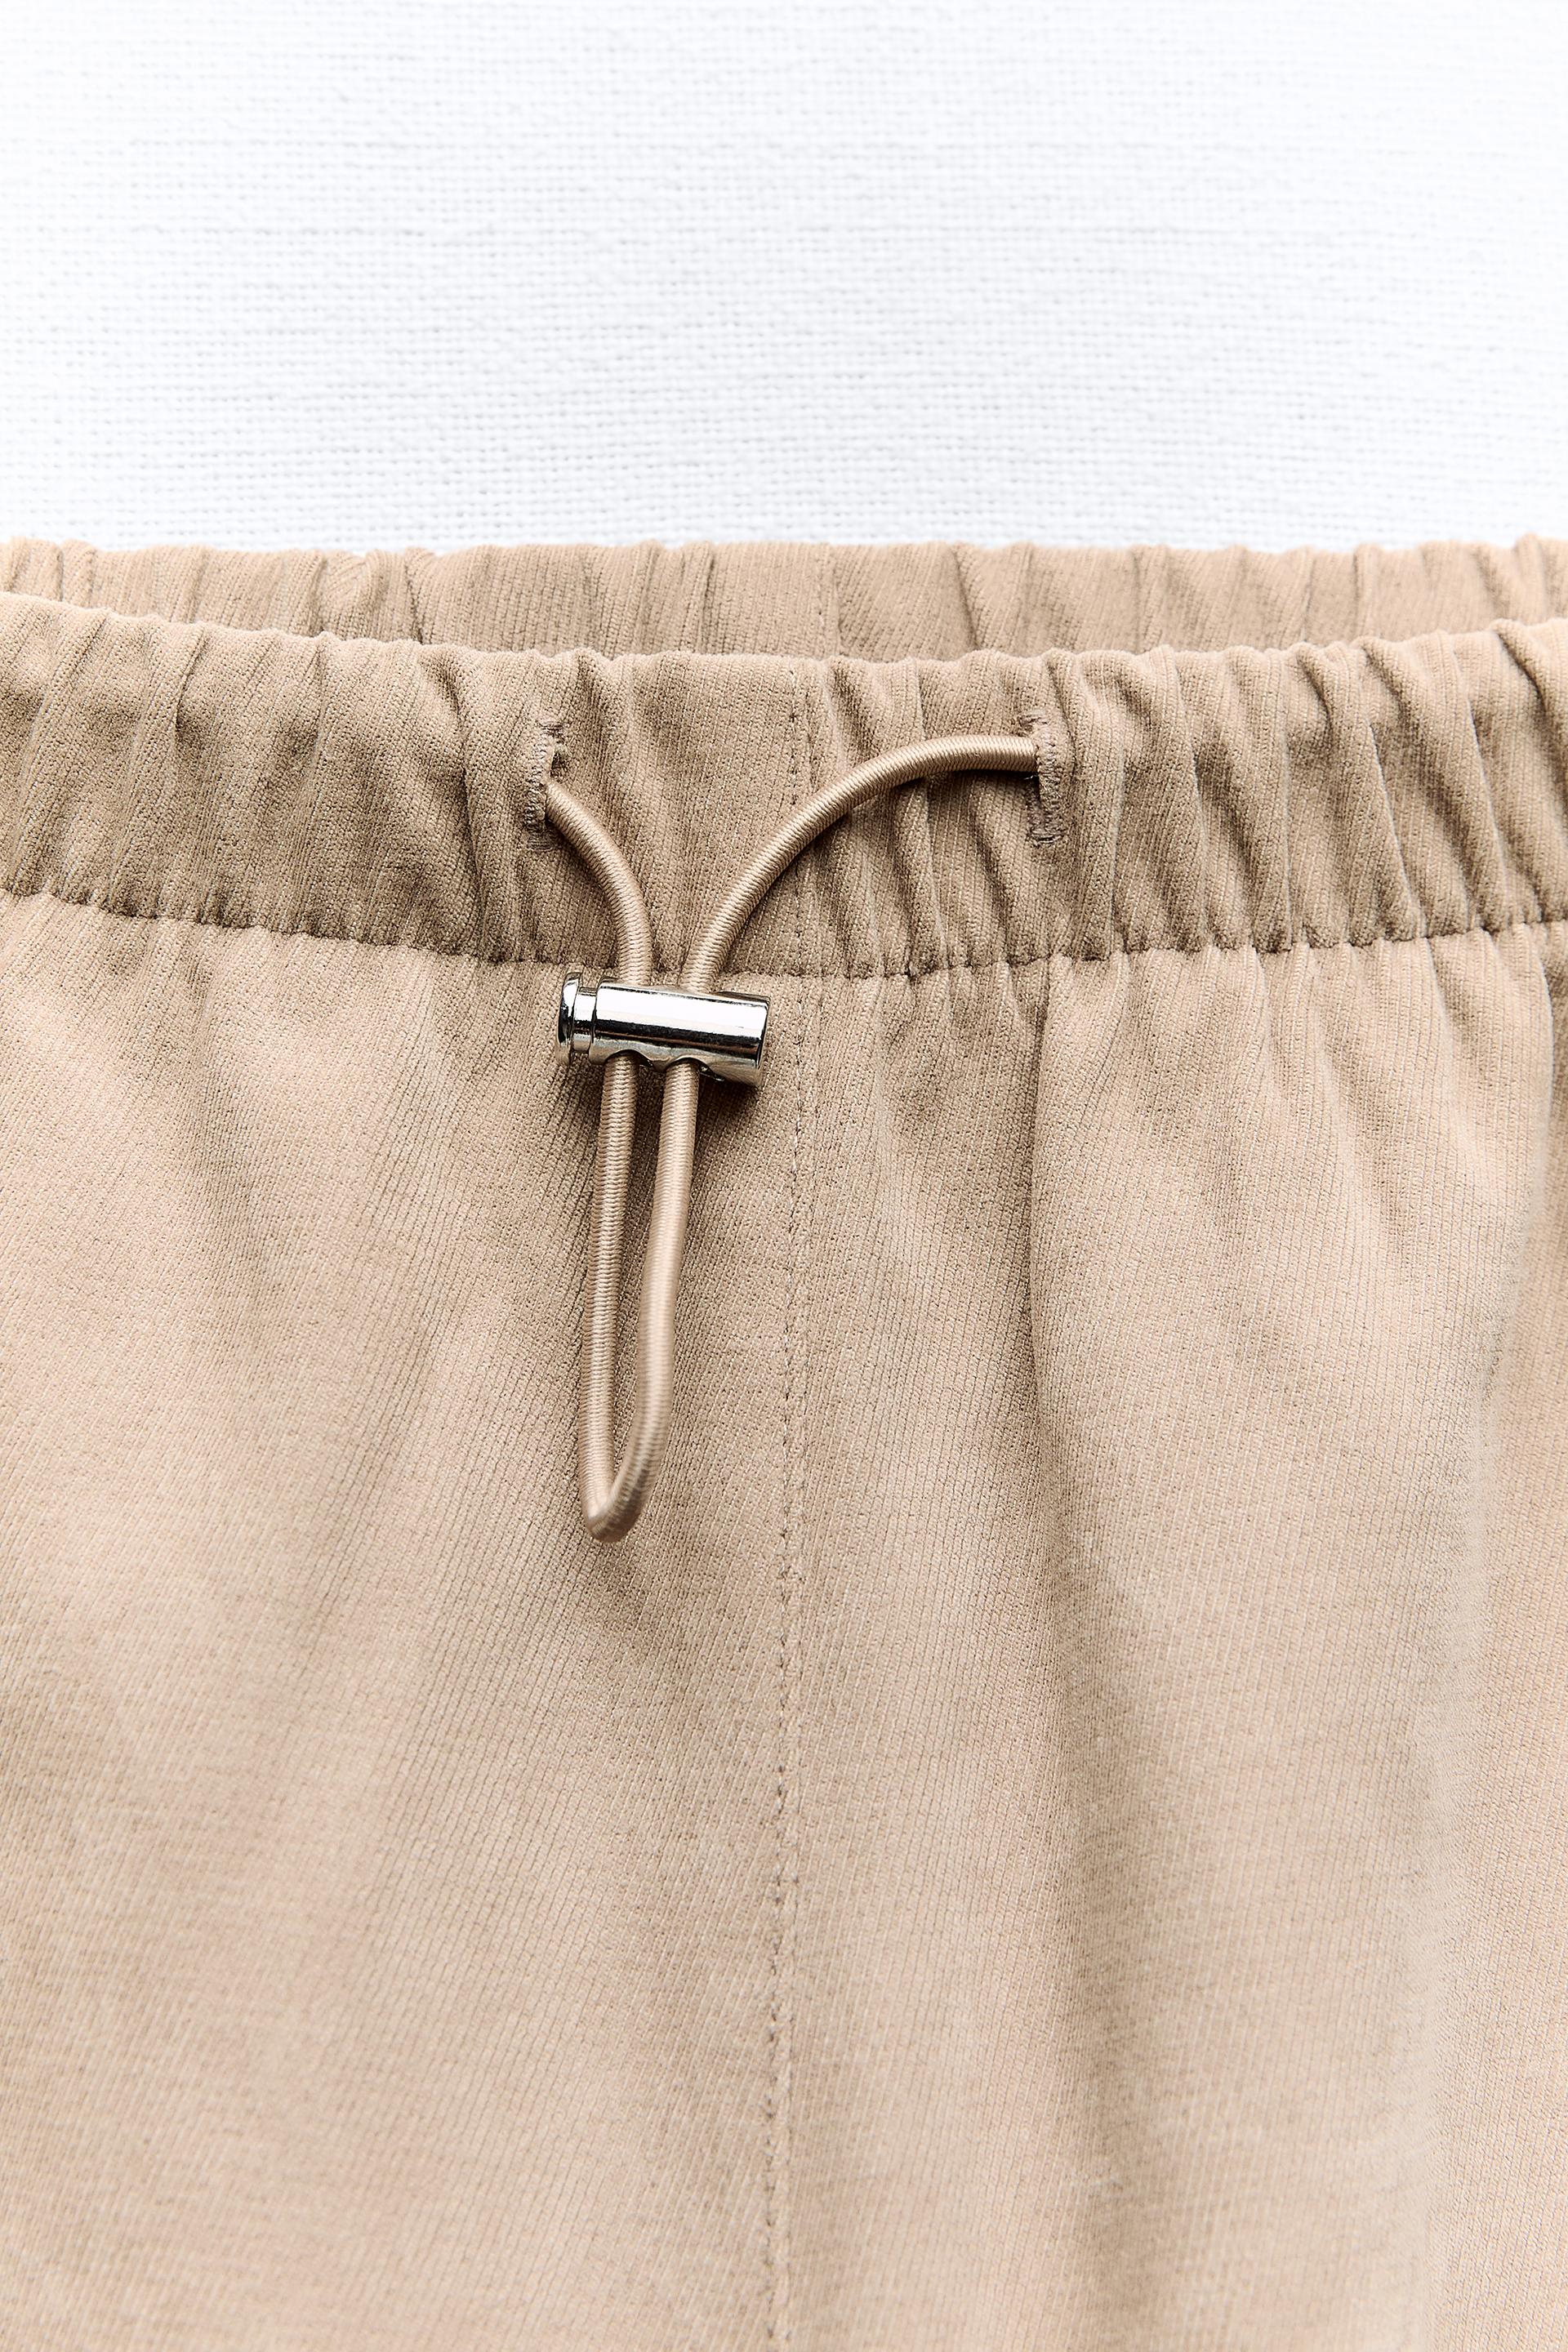 Summer Savings! Zpanxa Women's Slacks High Waist Pants Solid Color Elastic  Belt Vintage Stylish Cotton And Linen Double Pockets Waist Wide-Leg Pants  Women's Sweatpants Work Pants 